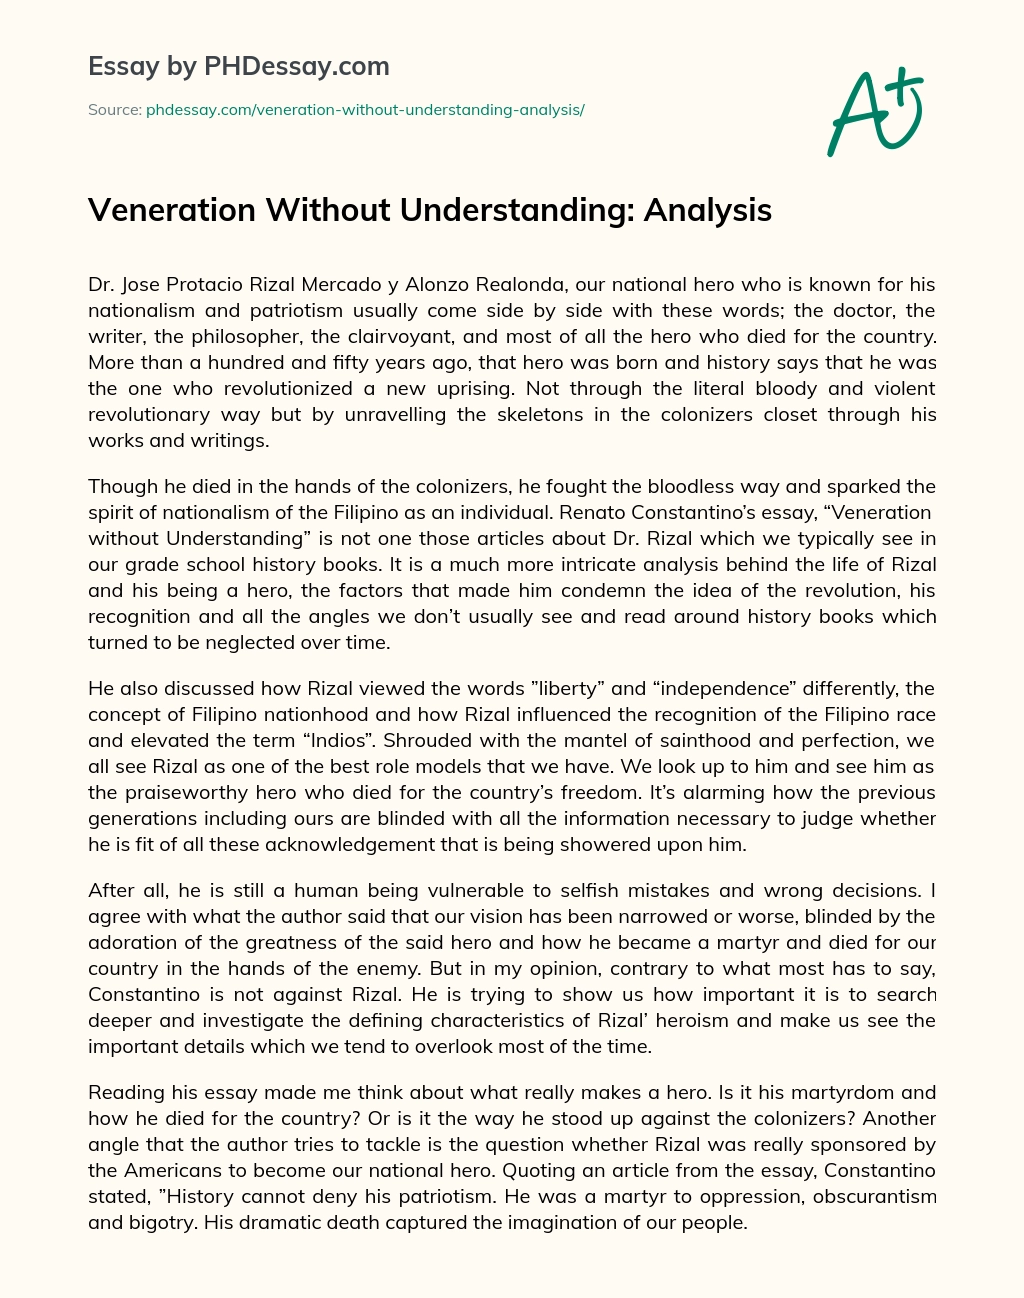 Veneration Without Understanding: Analysis essay